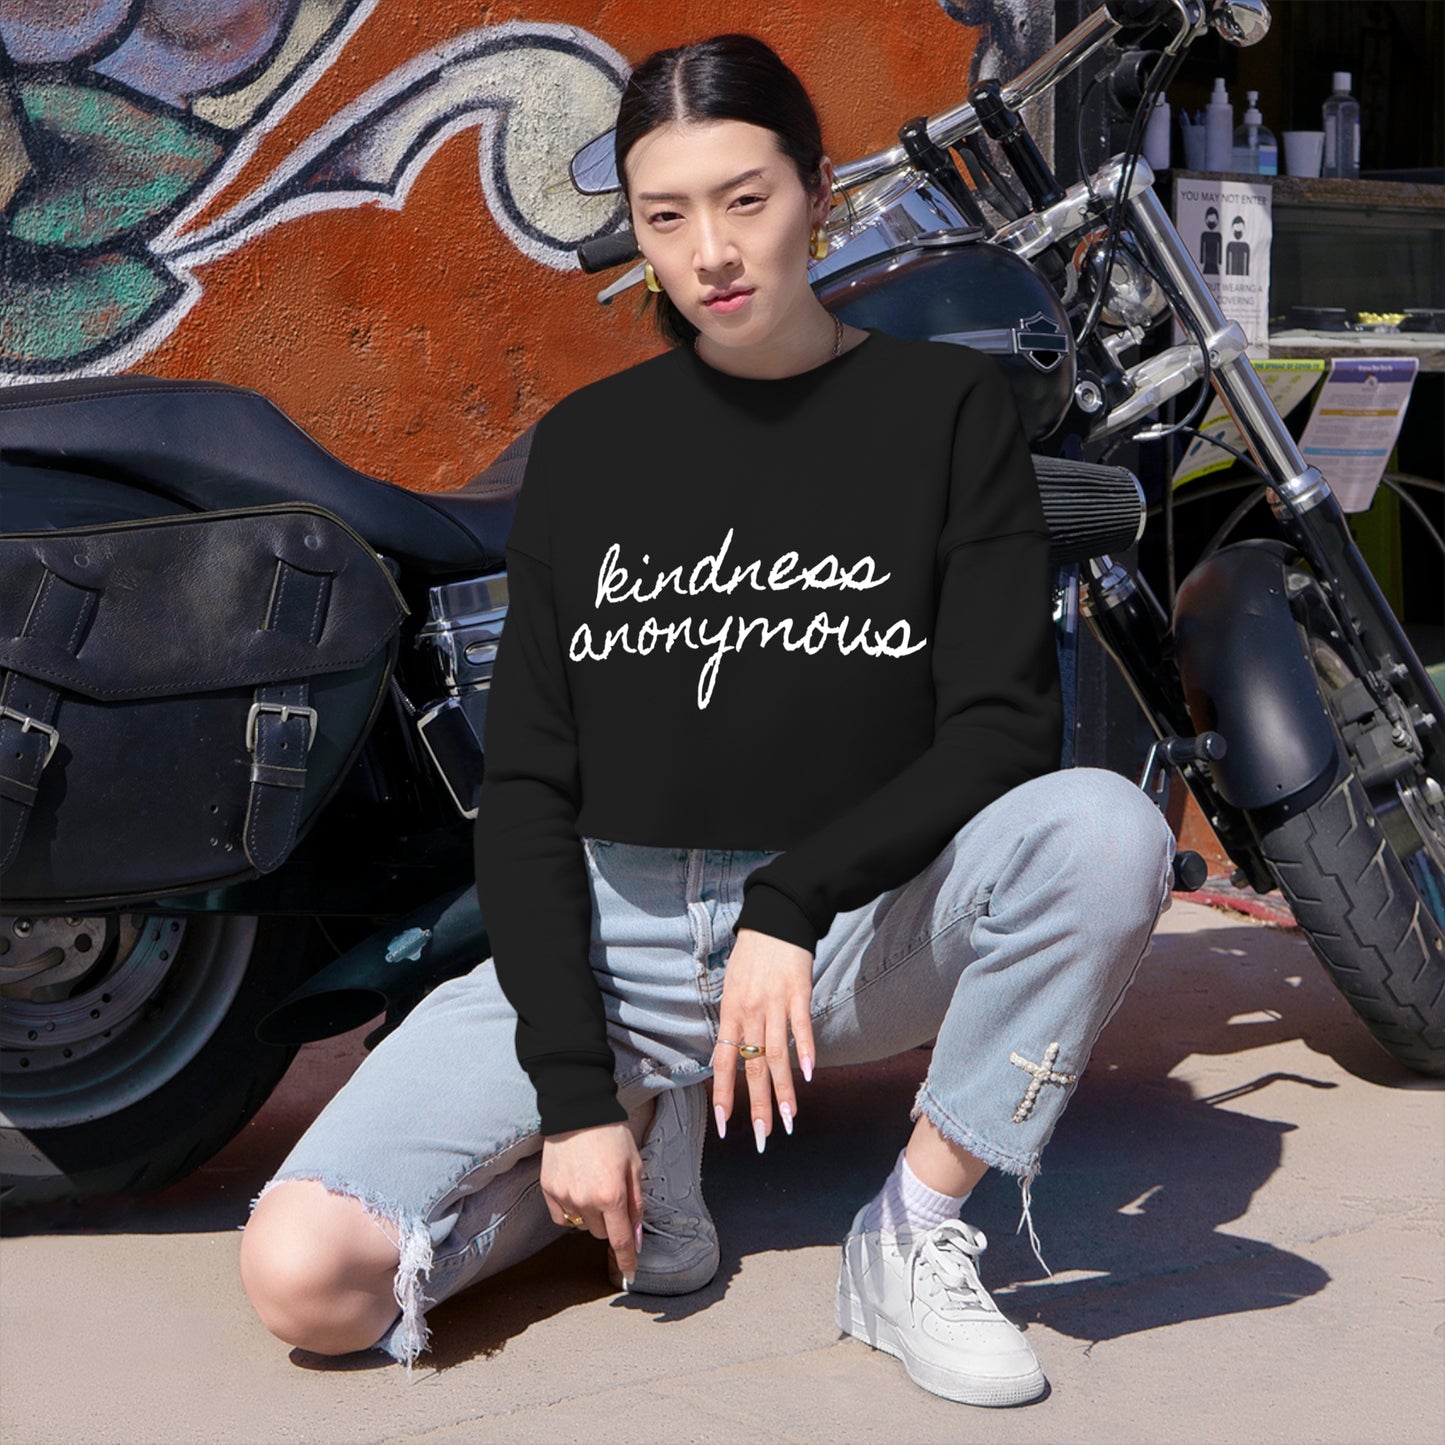 iheartu™️ x kindness anonymous Cropped Sweatshirt